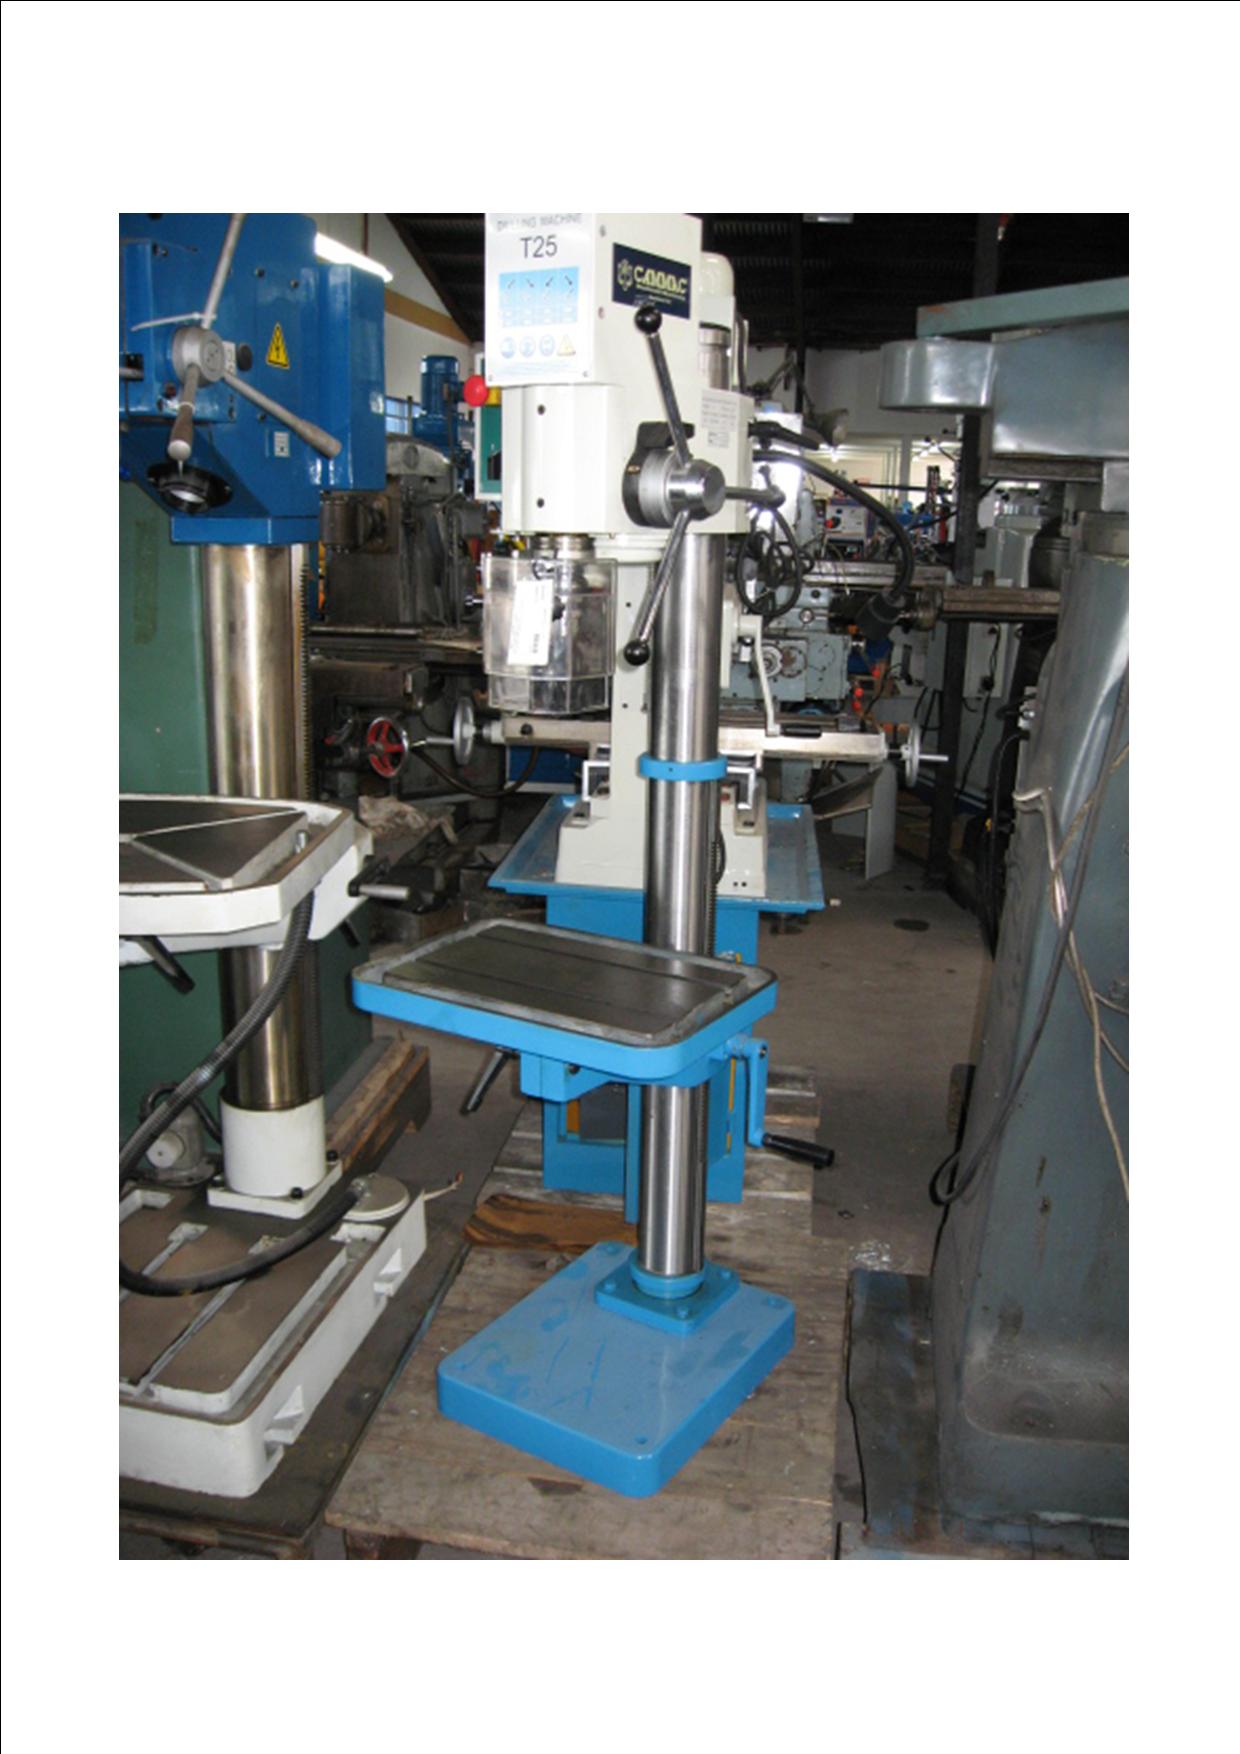 T25 geared head 3 phase drill press, MT3